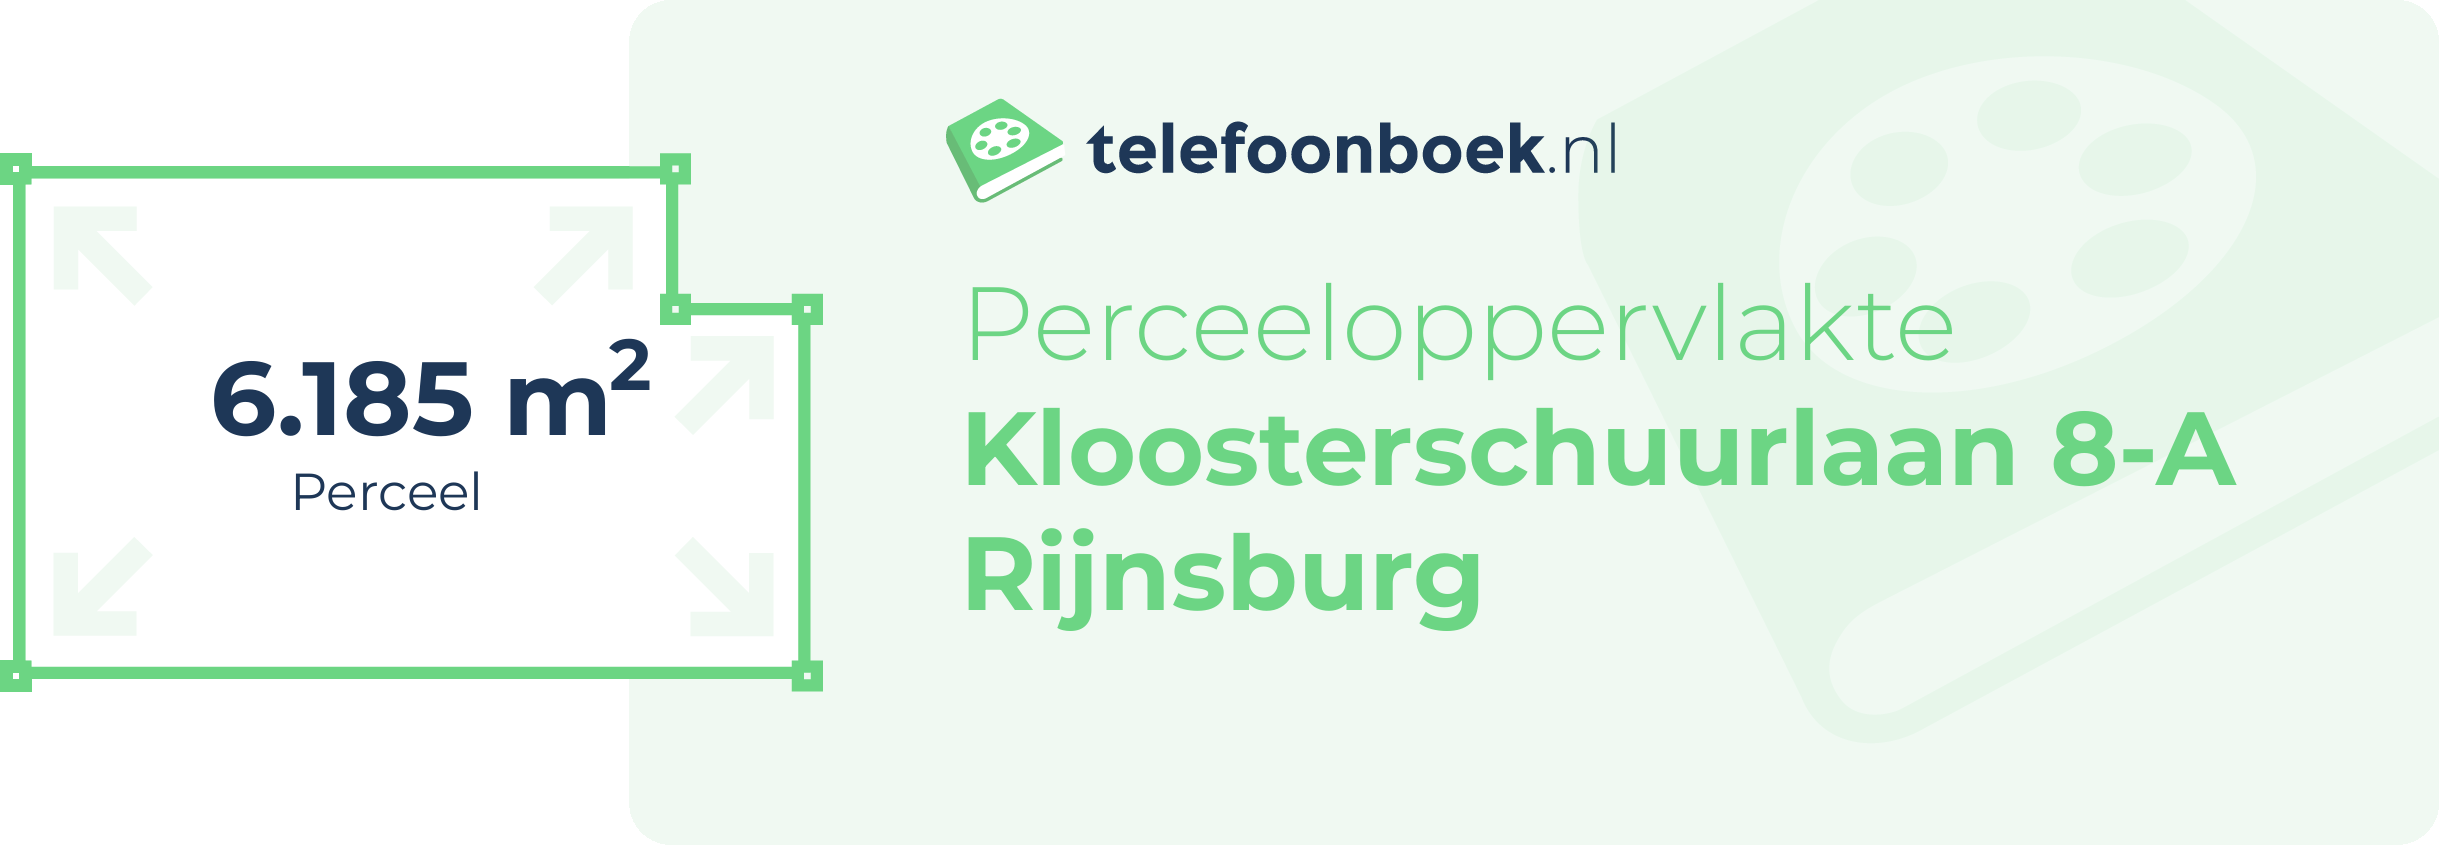 Perceeloppervlakte Kloosterschuurlaan 8-A Rijnsburg